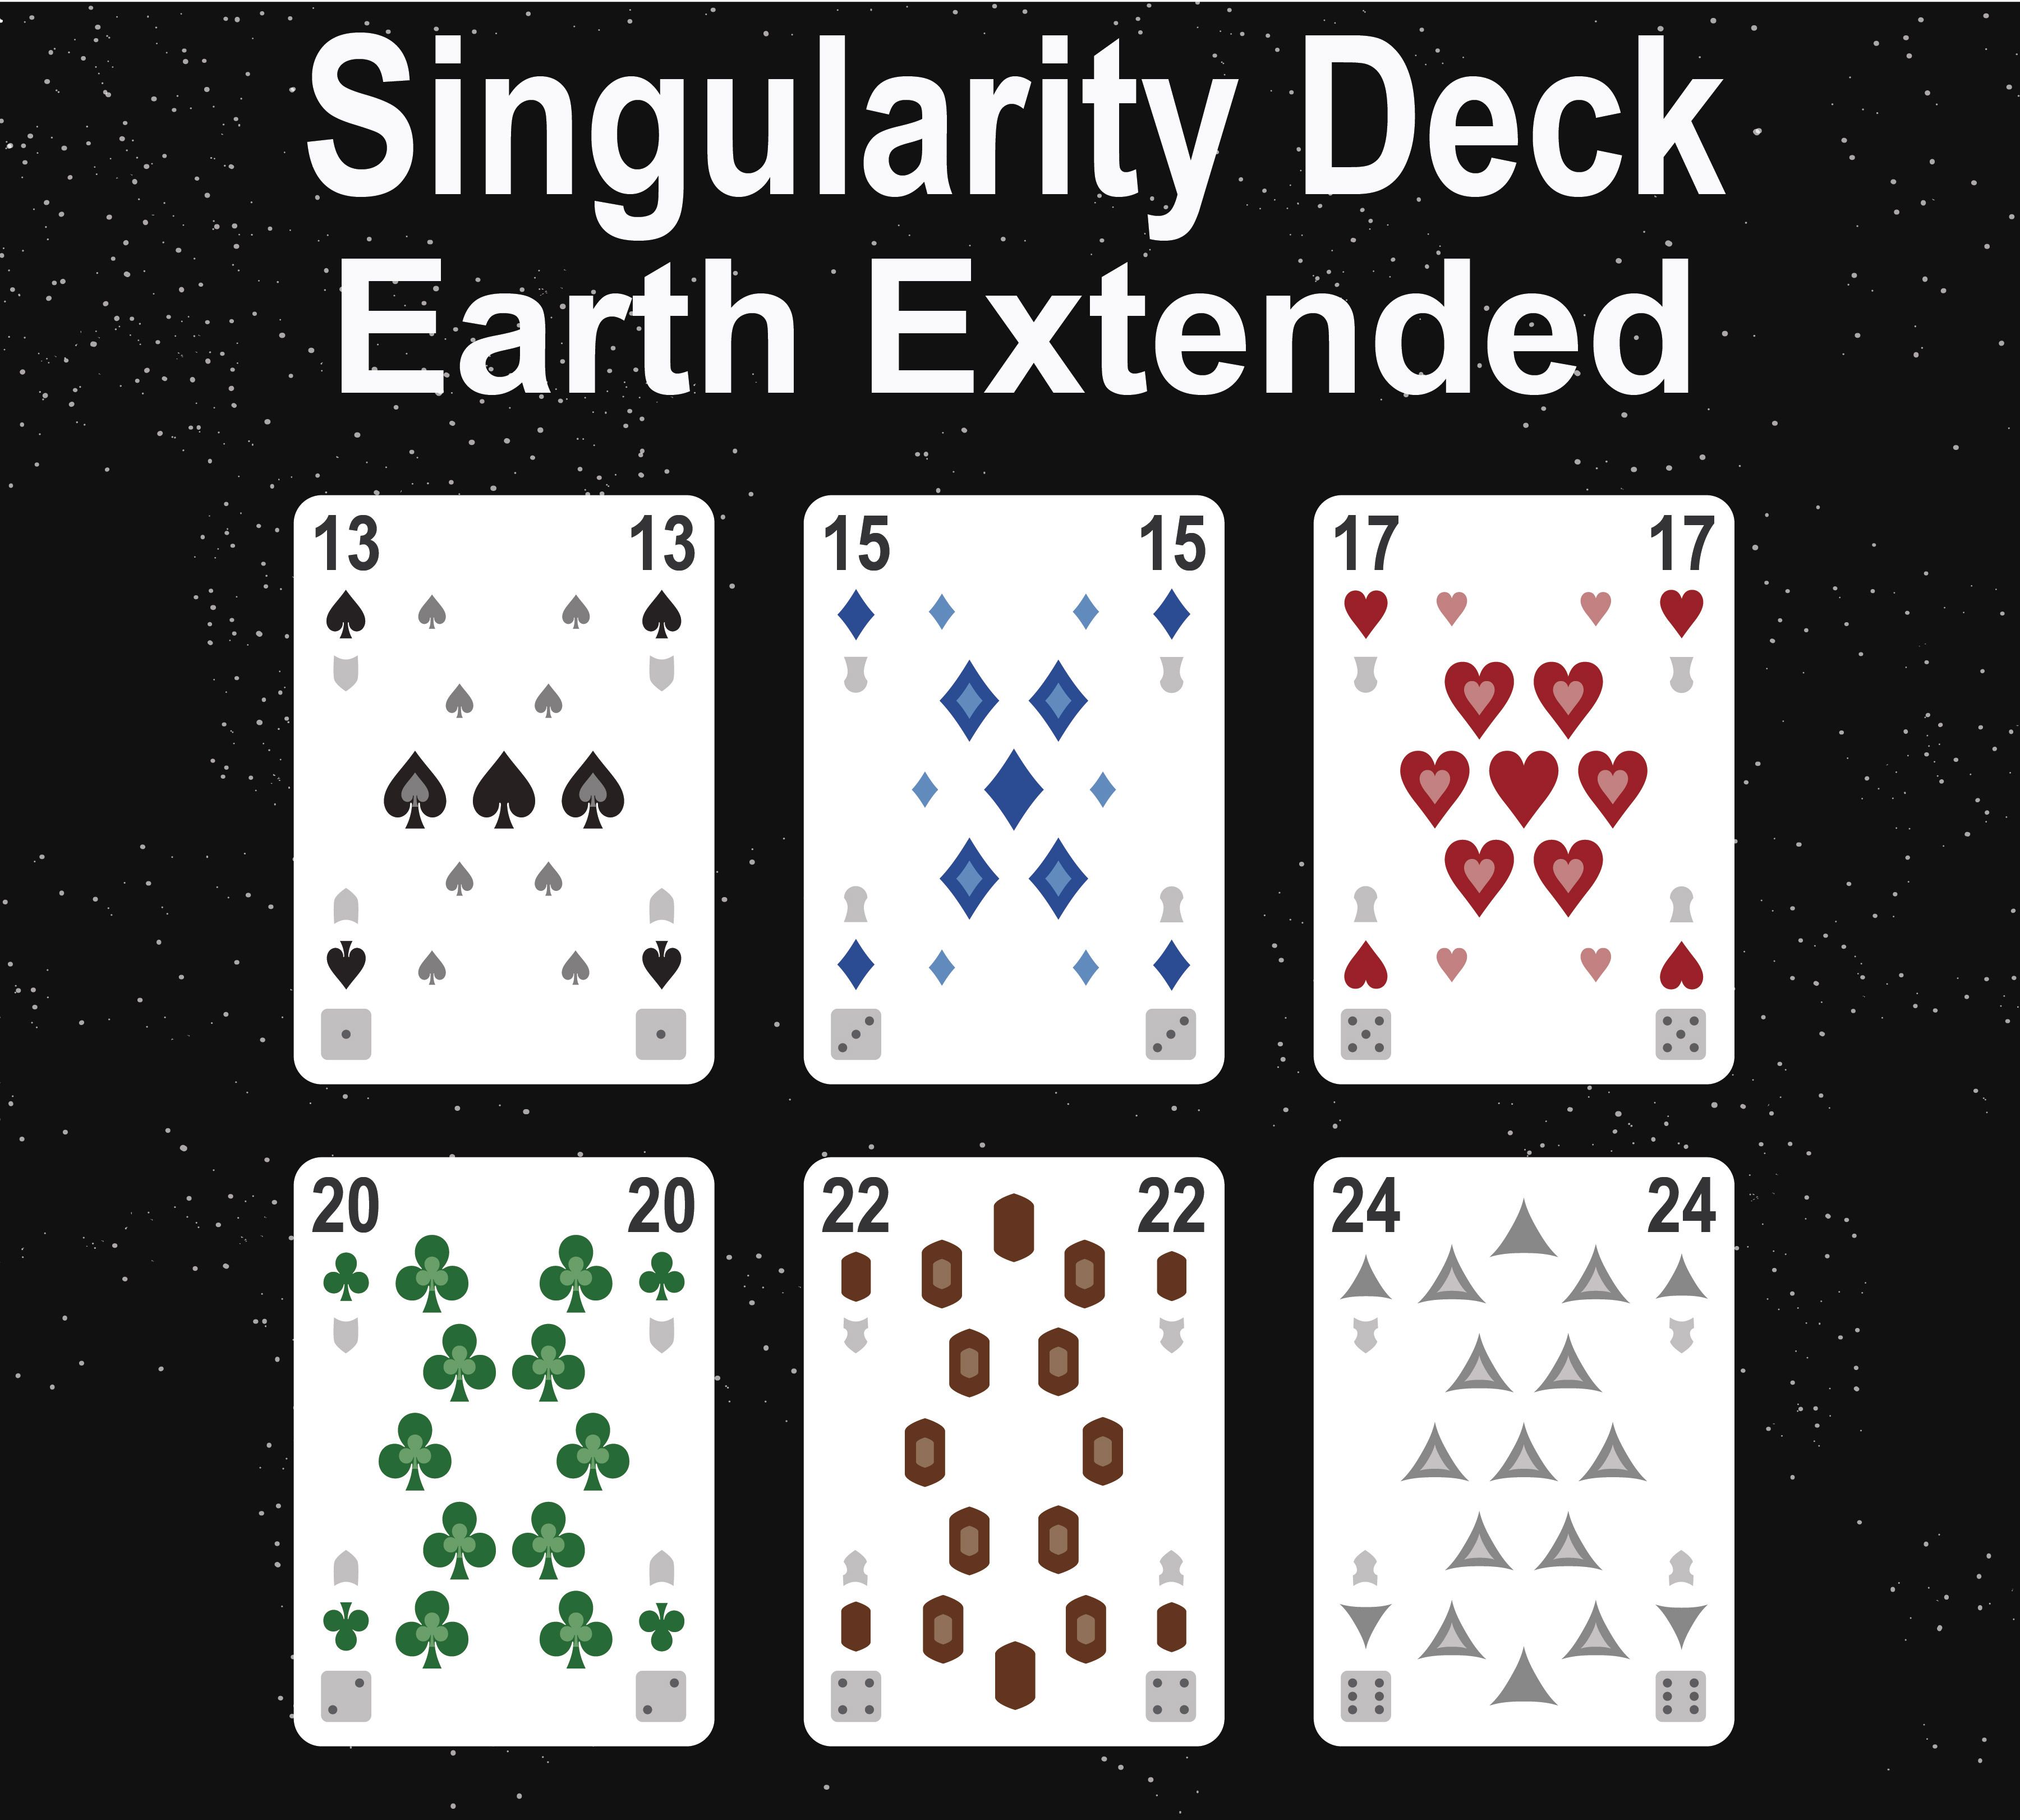 The Singularity Deck: Extended Ranks